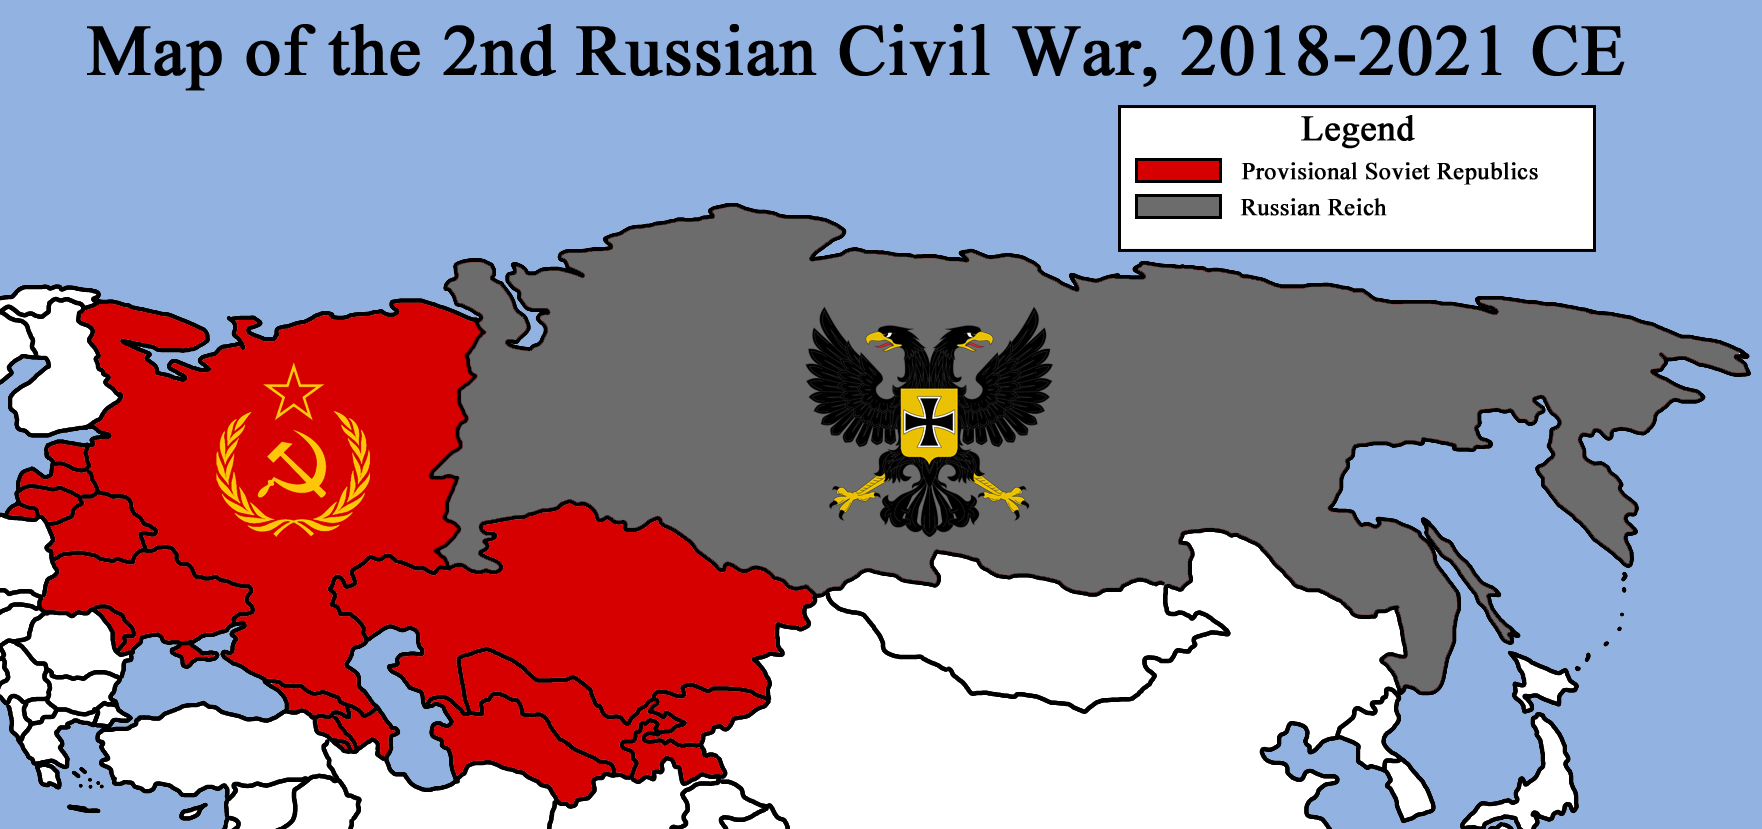 Map of the 2nd Russian Civil War, 2018-2021 CE by RedRich1917 on DeviantArt